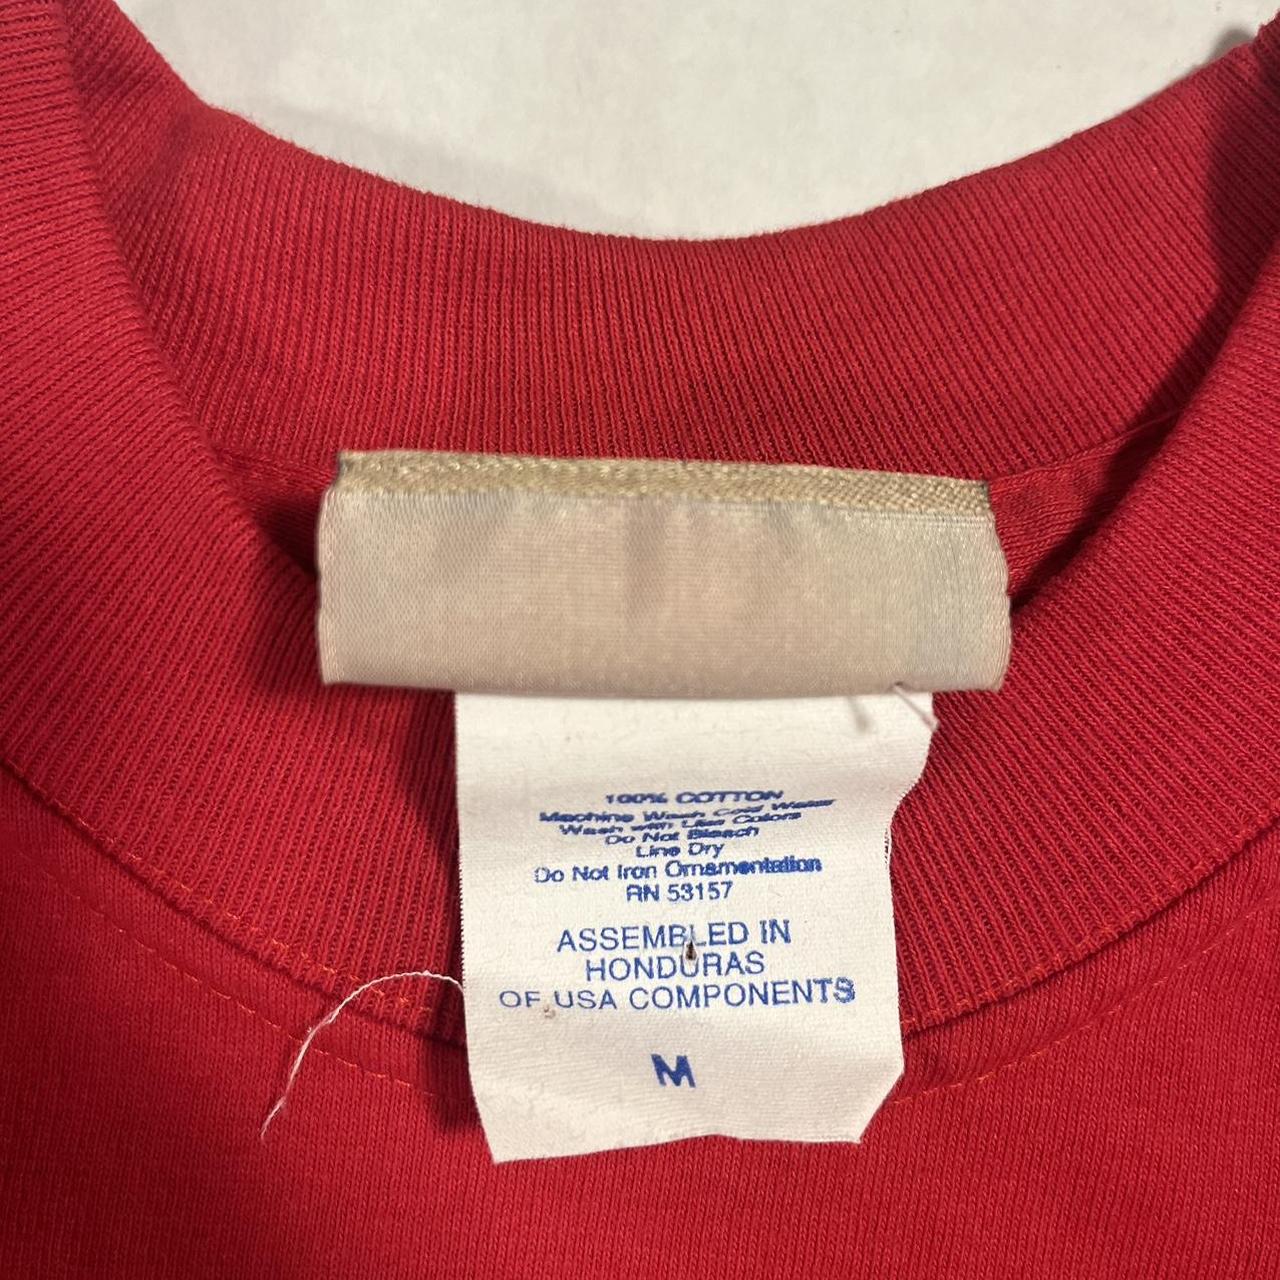 Vintage 76ers Hardwood Classic Jersey Dress #jersey - Depop